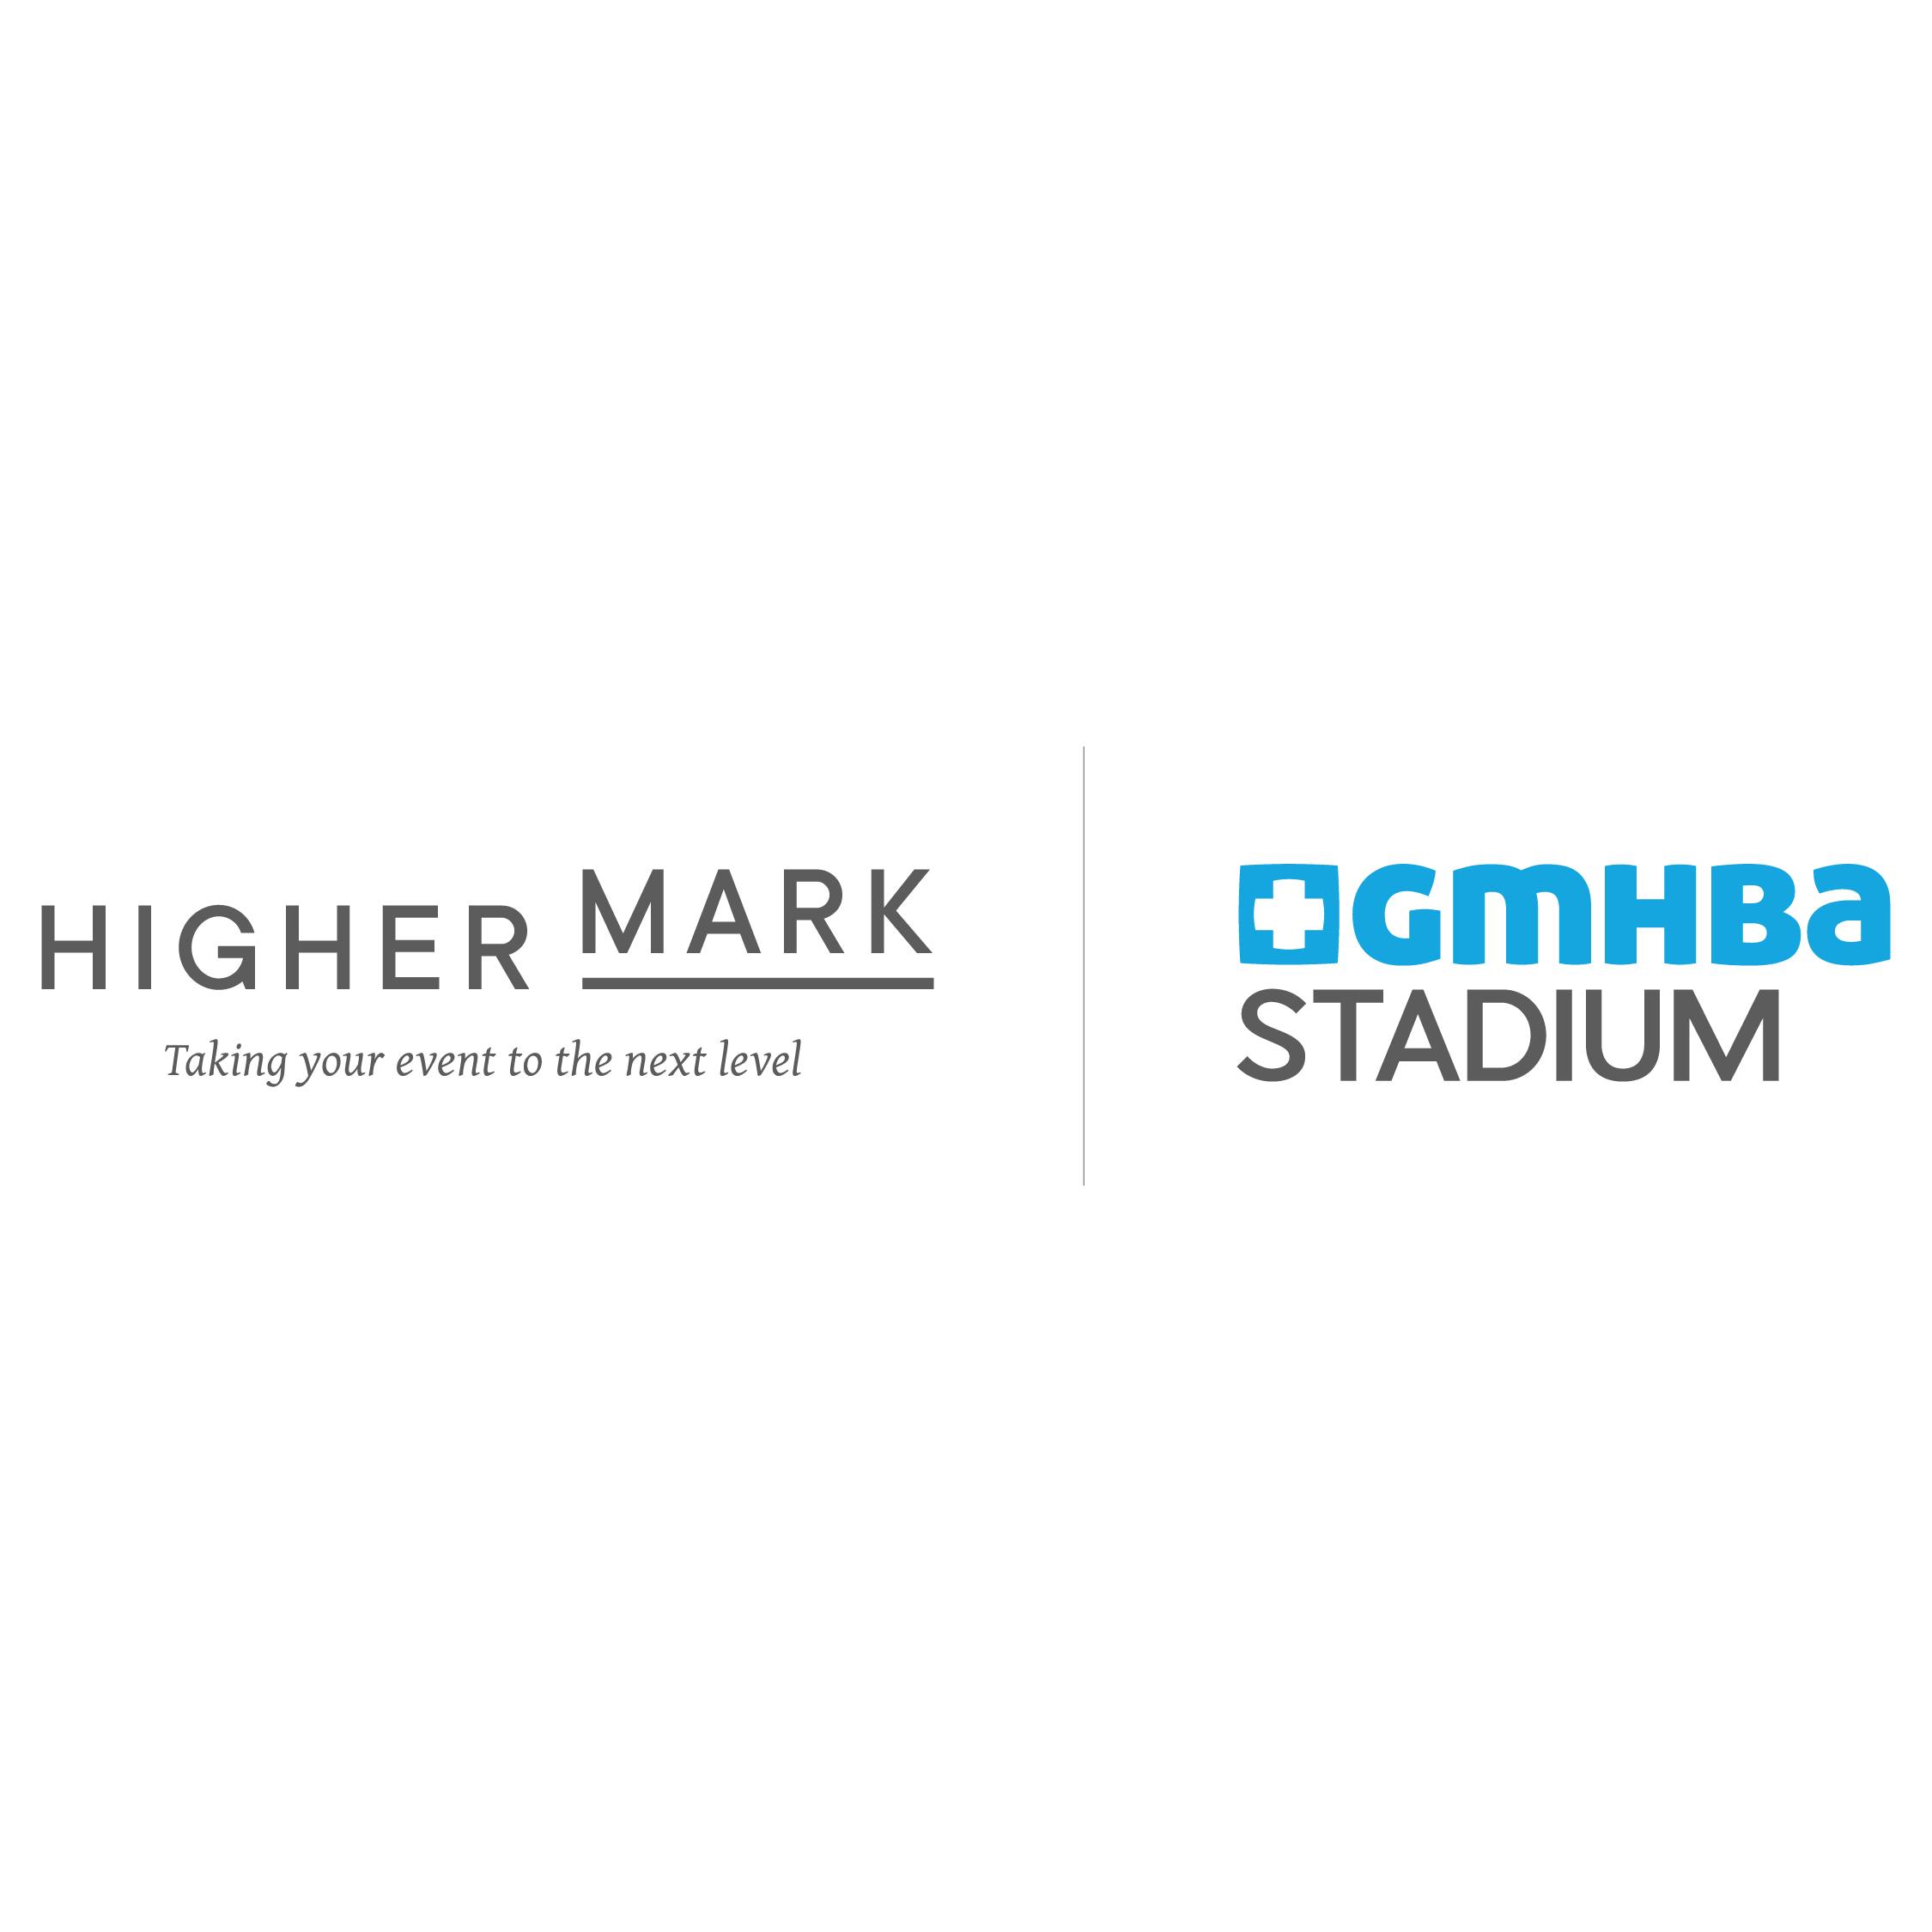 Higher Mark @ GMHBA Stadium